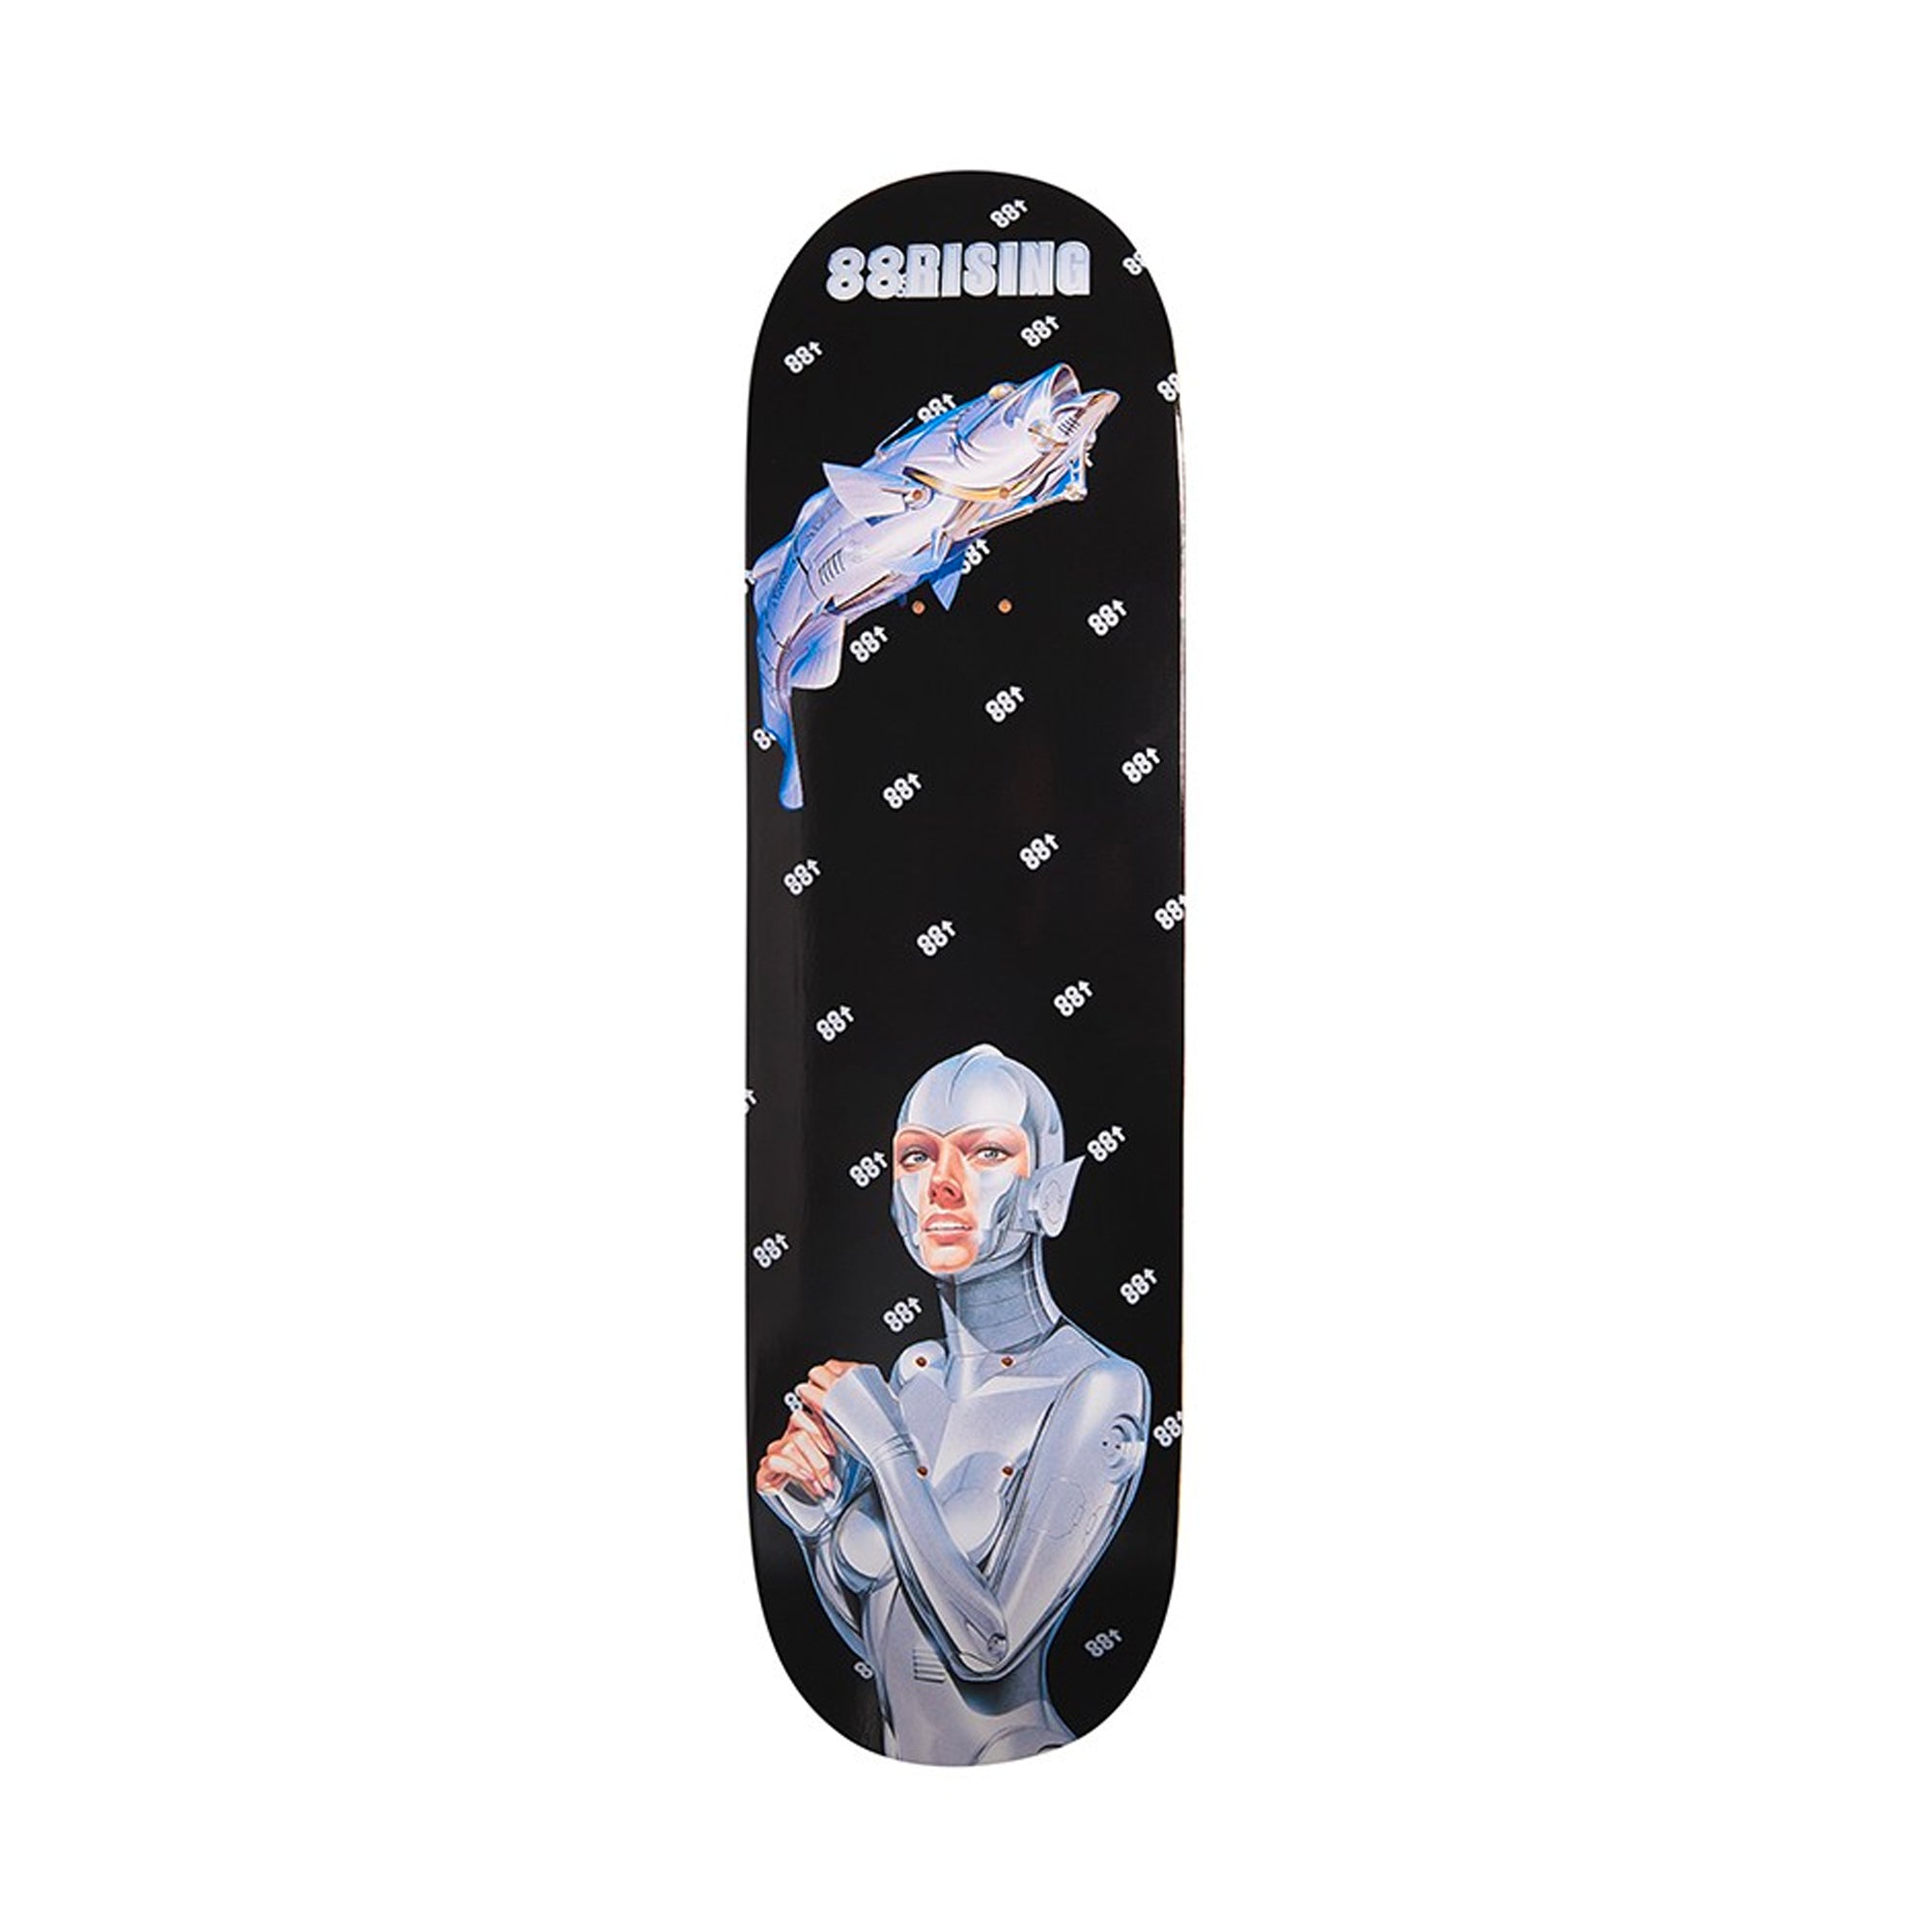 Sorayama x 88RISING Silver Robot Skateboard Deck Black-PLUS